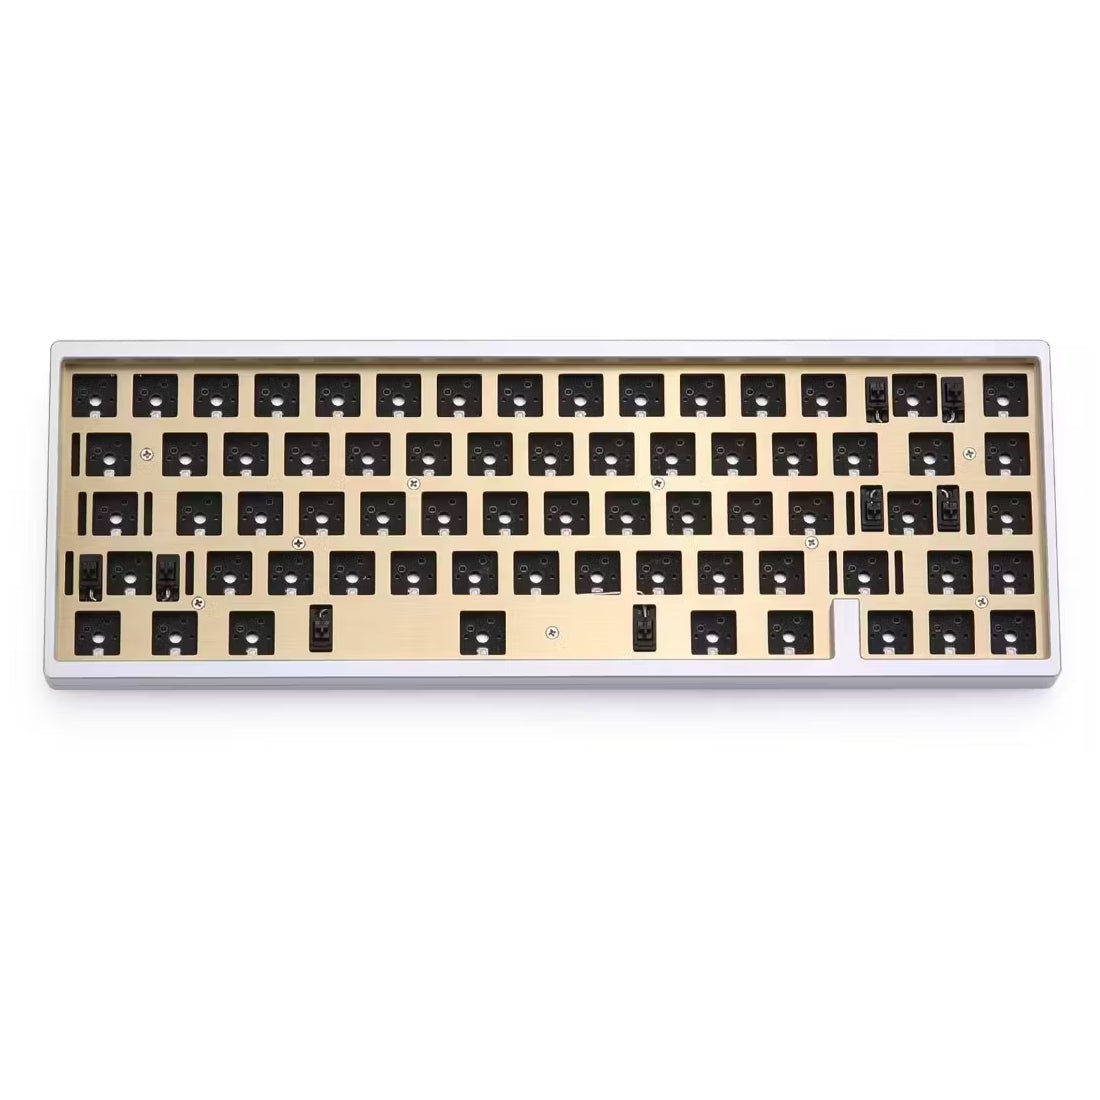 KBD67 Mark II PVD Laser Mechanical Keyboard DIY Kit - Store 974 | ستور ٩٧٤